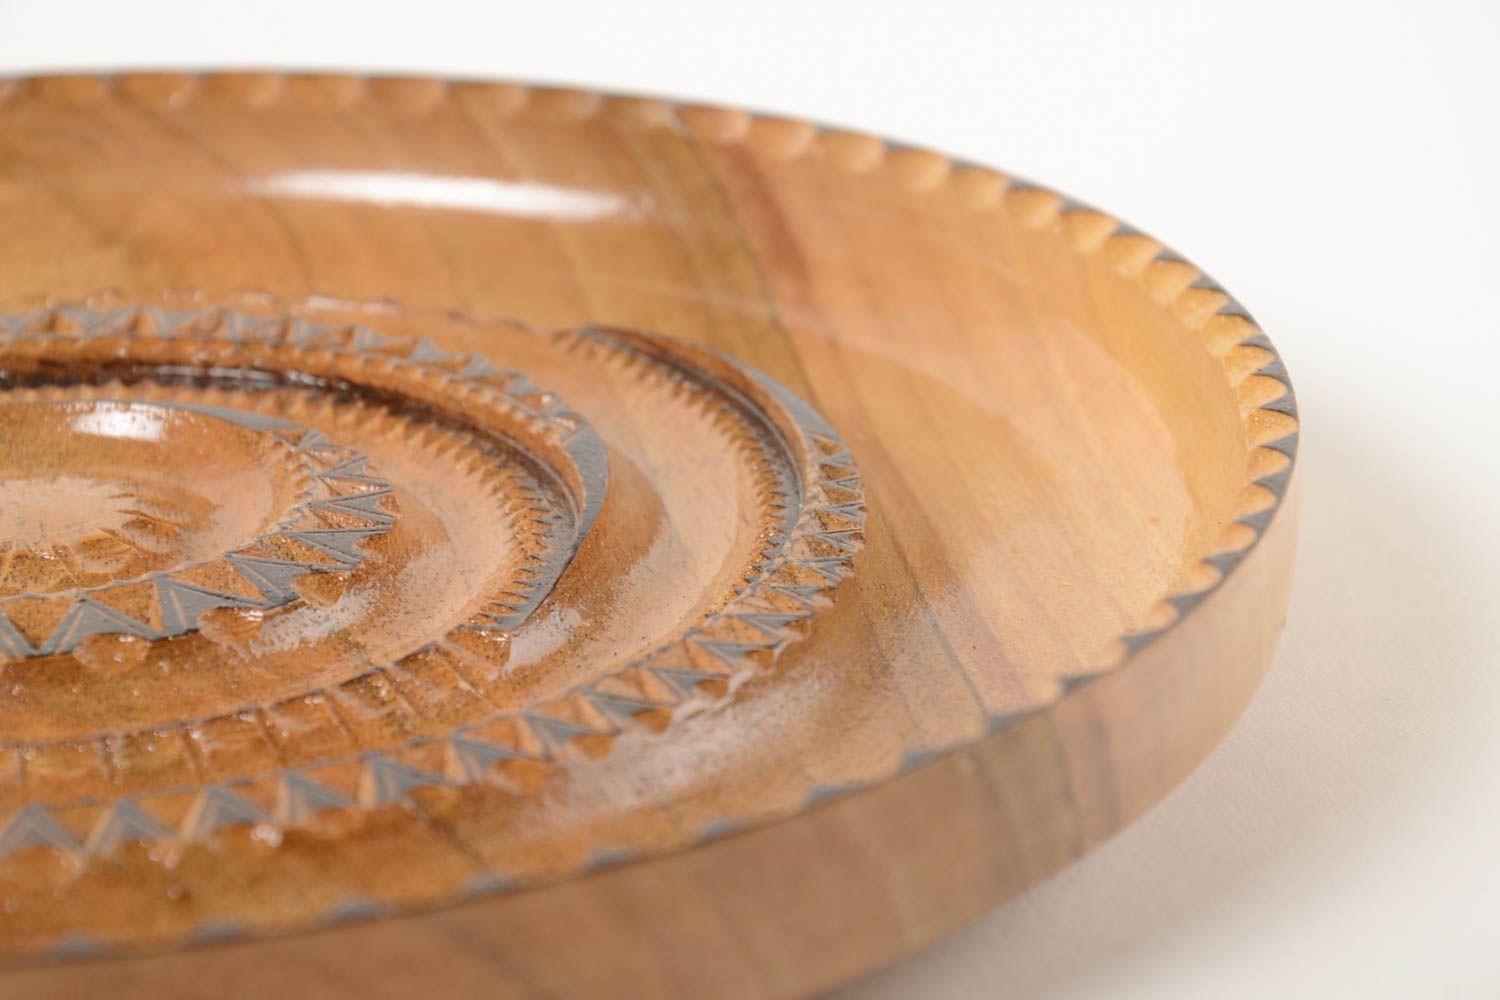 Plato decorativo de madera artesanal utensilio de cocina menaje del hogar foto 4